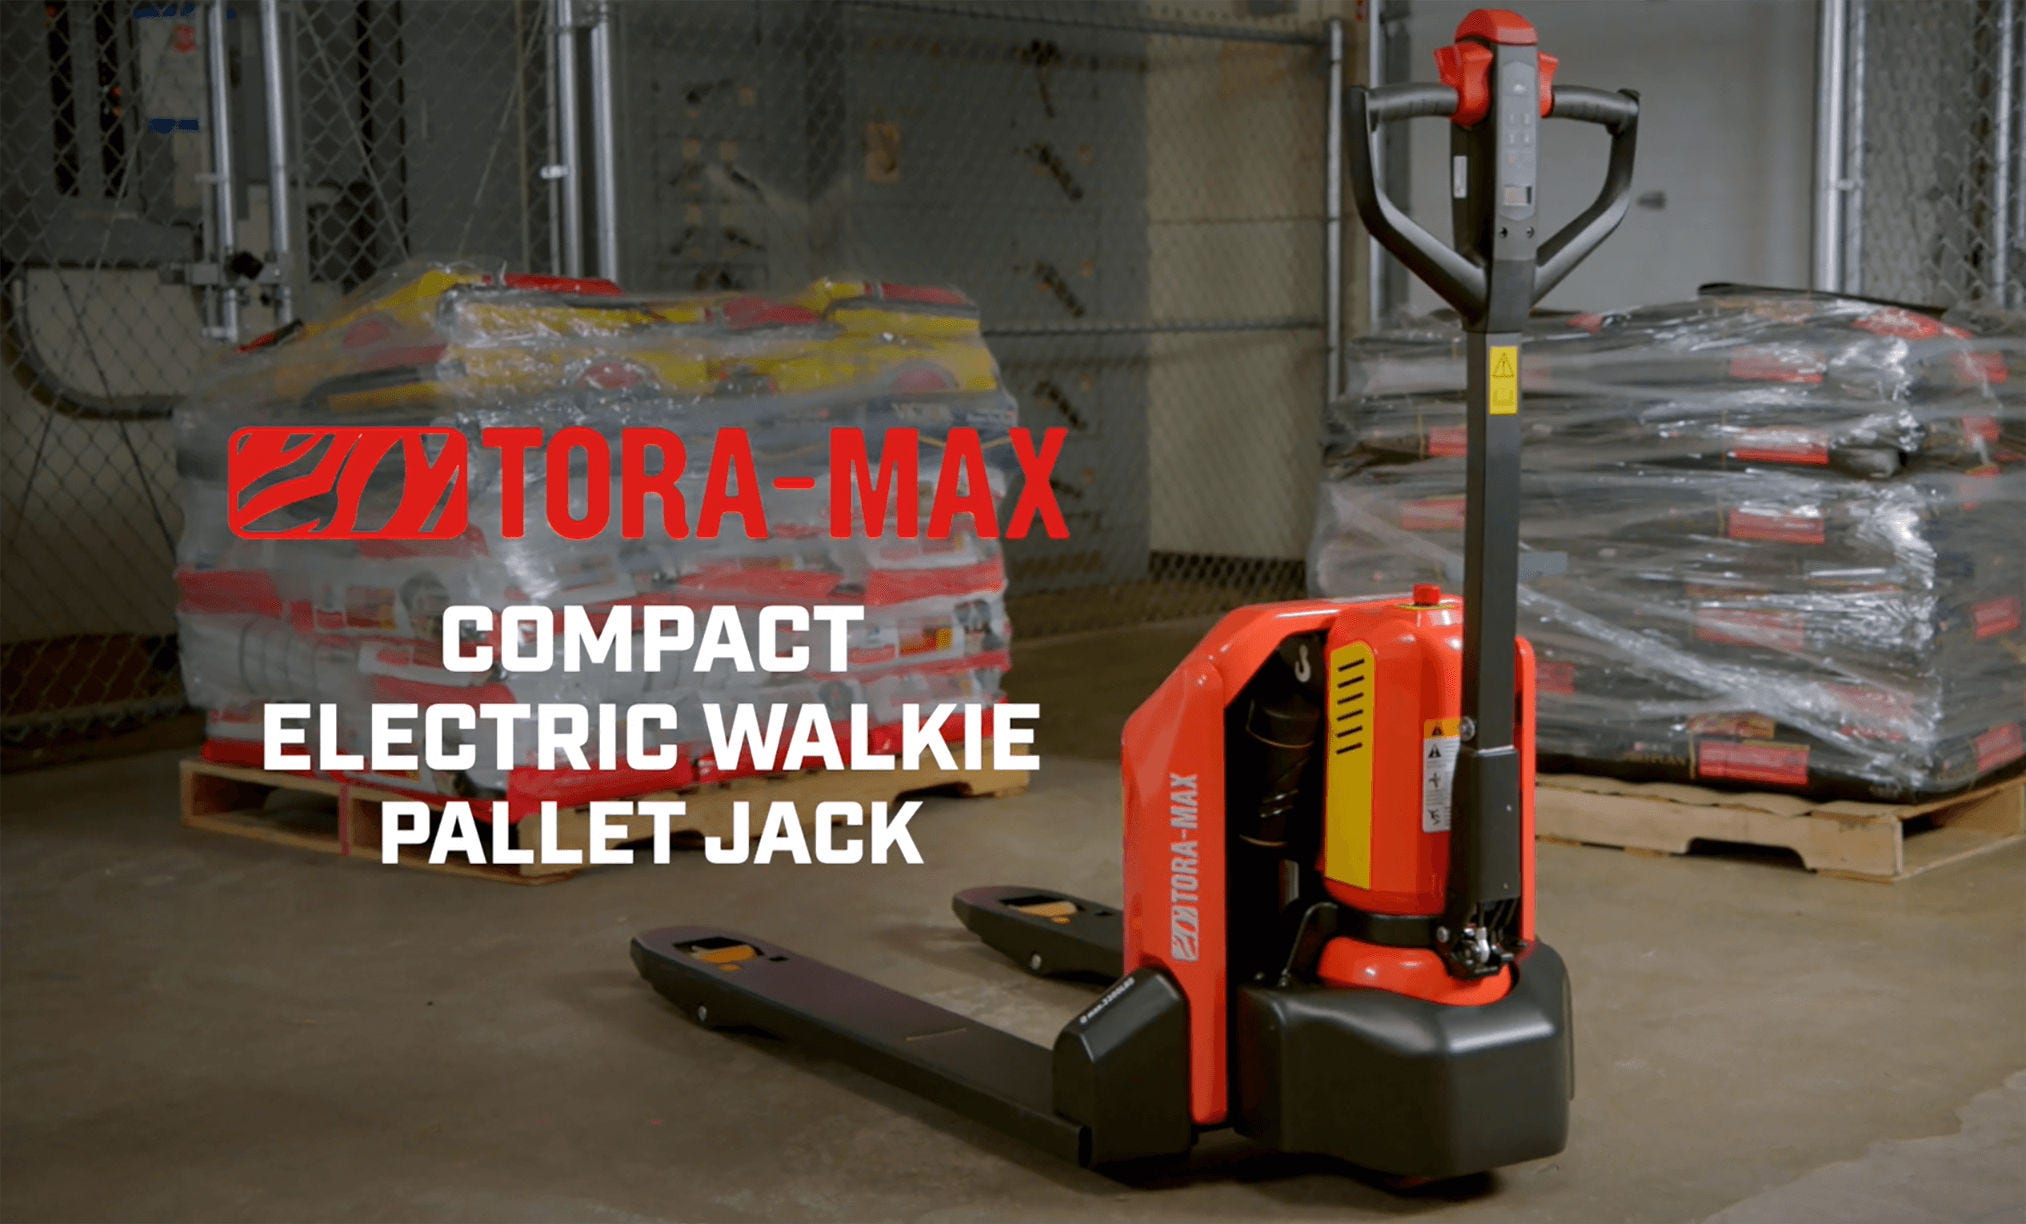 Tora-Max Compact Electric Walkie Pallet Jack